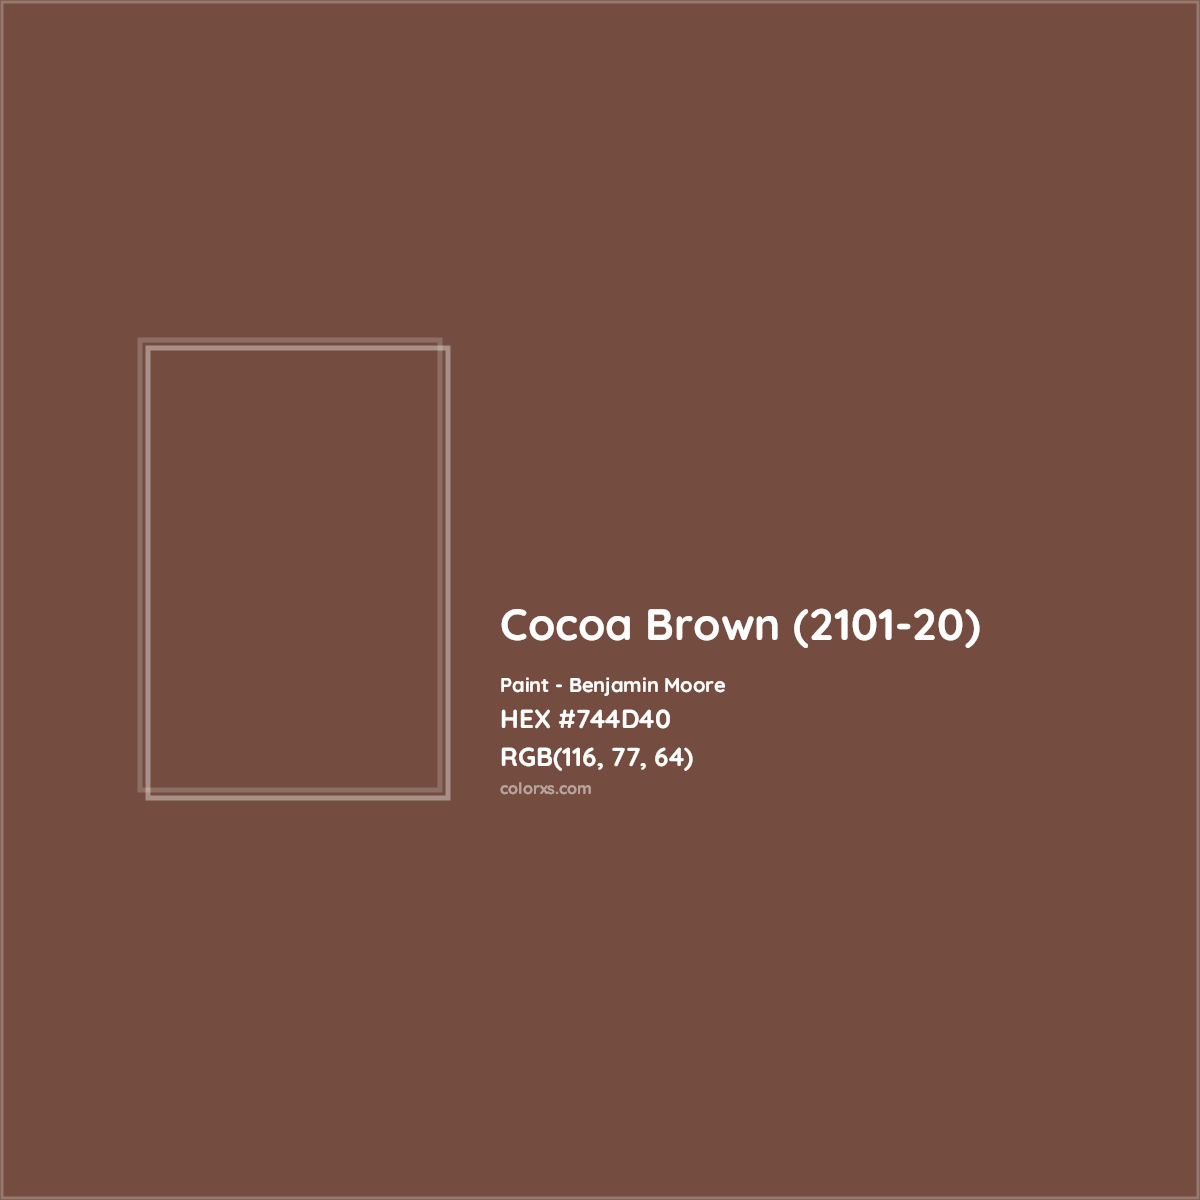 Rainbow Felt Dark Brown (Cocoa Brown) - 36 Wide